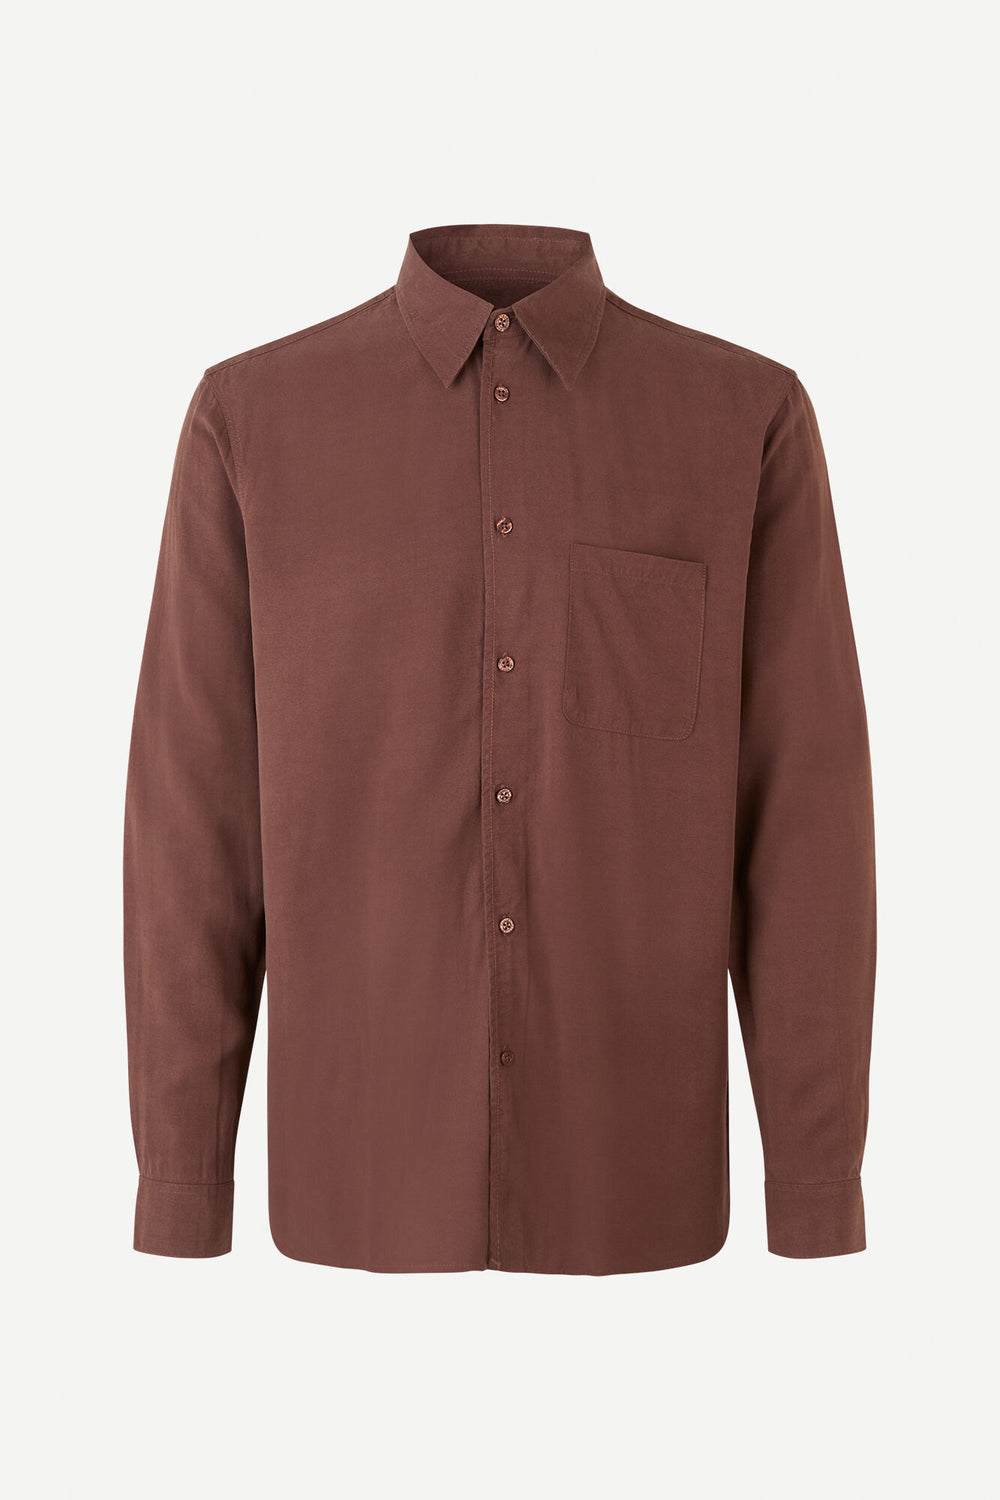 Liam FF Shirt 14333 - Brown Stone